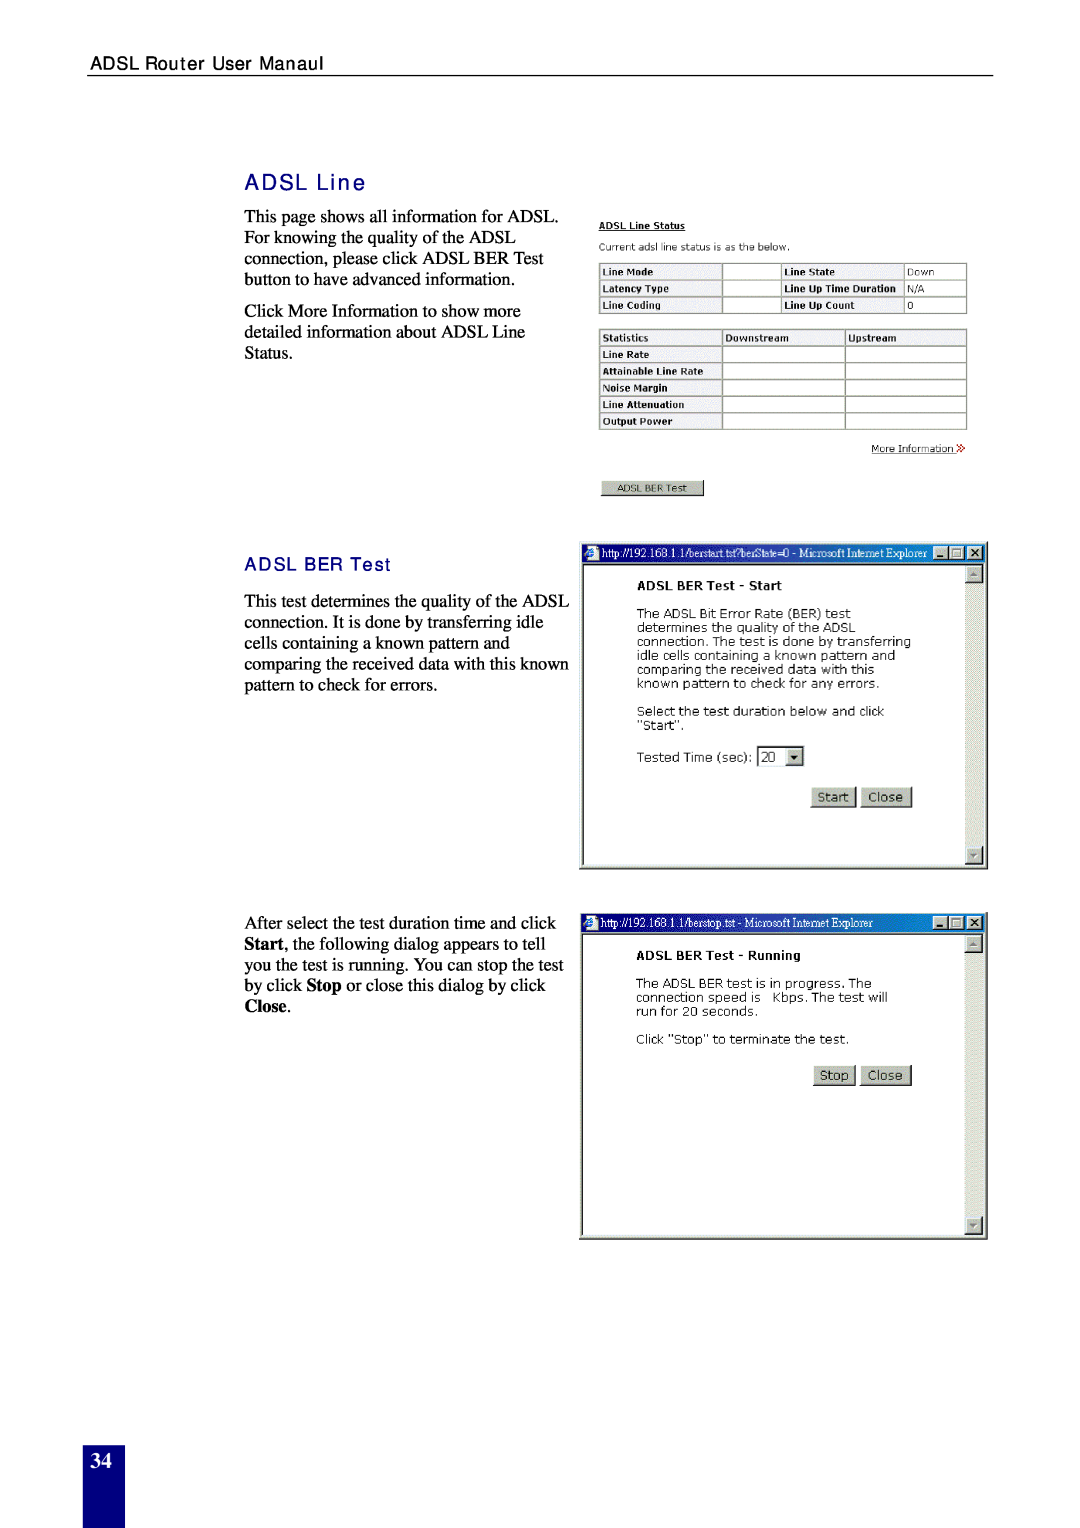 Dynalink RTA770W user manual ADSL Line, ADSL BER Test 